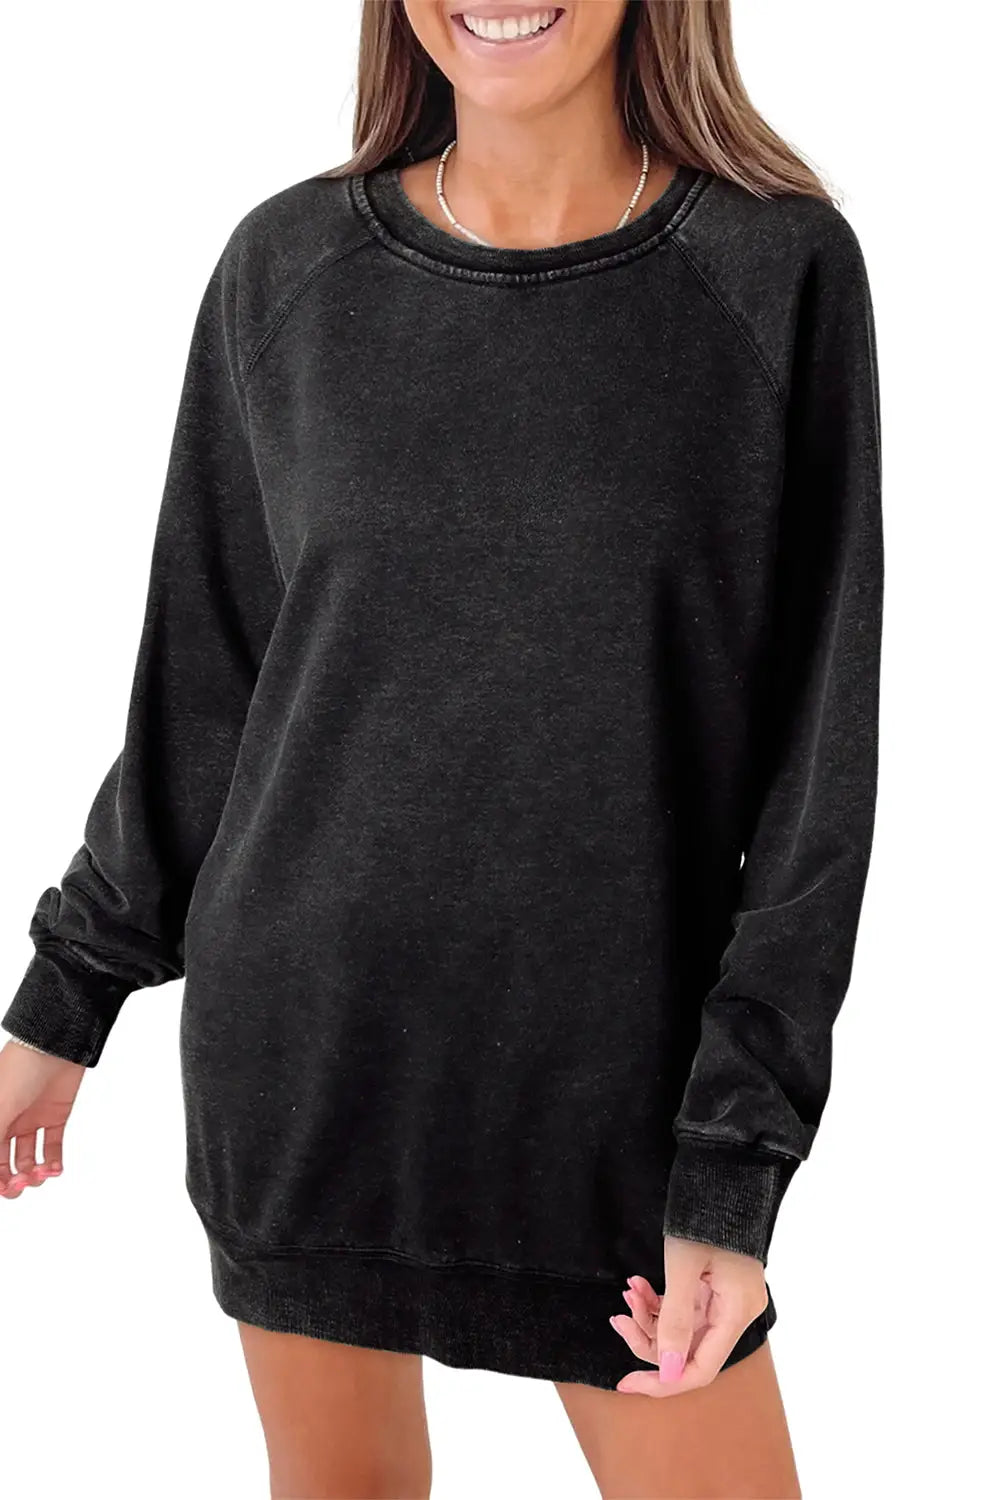 Black mineral wash oversized pullover sweatshirt - tops